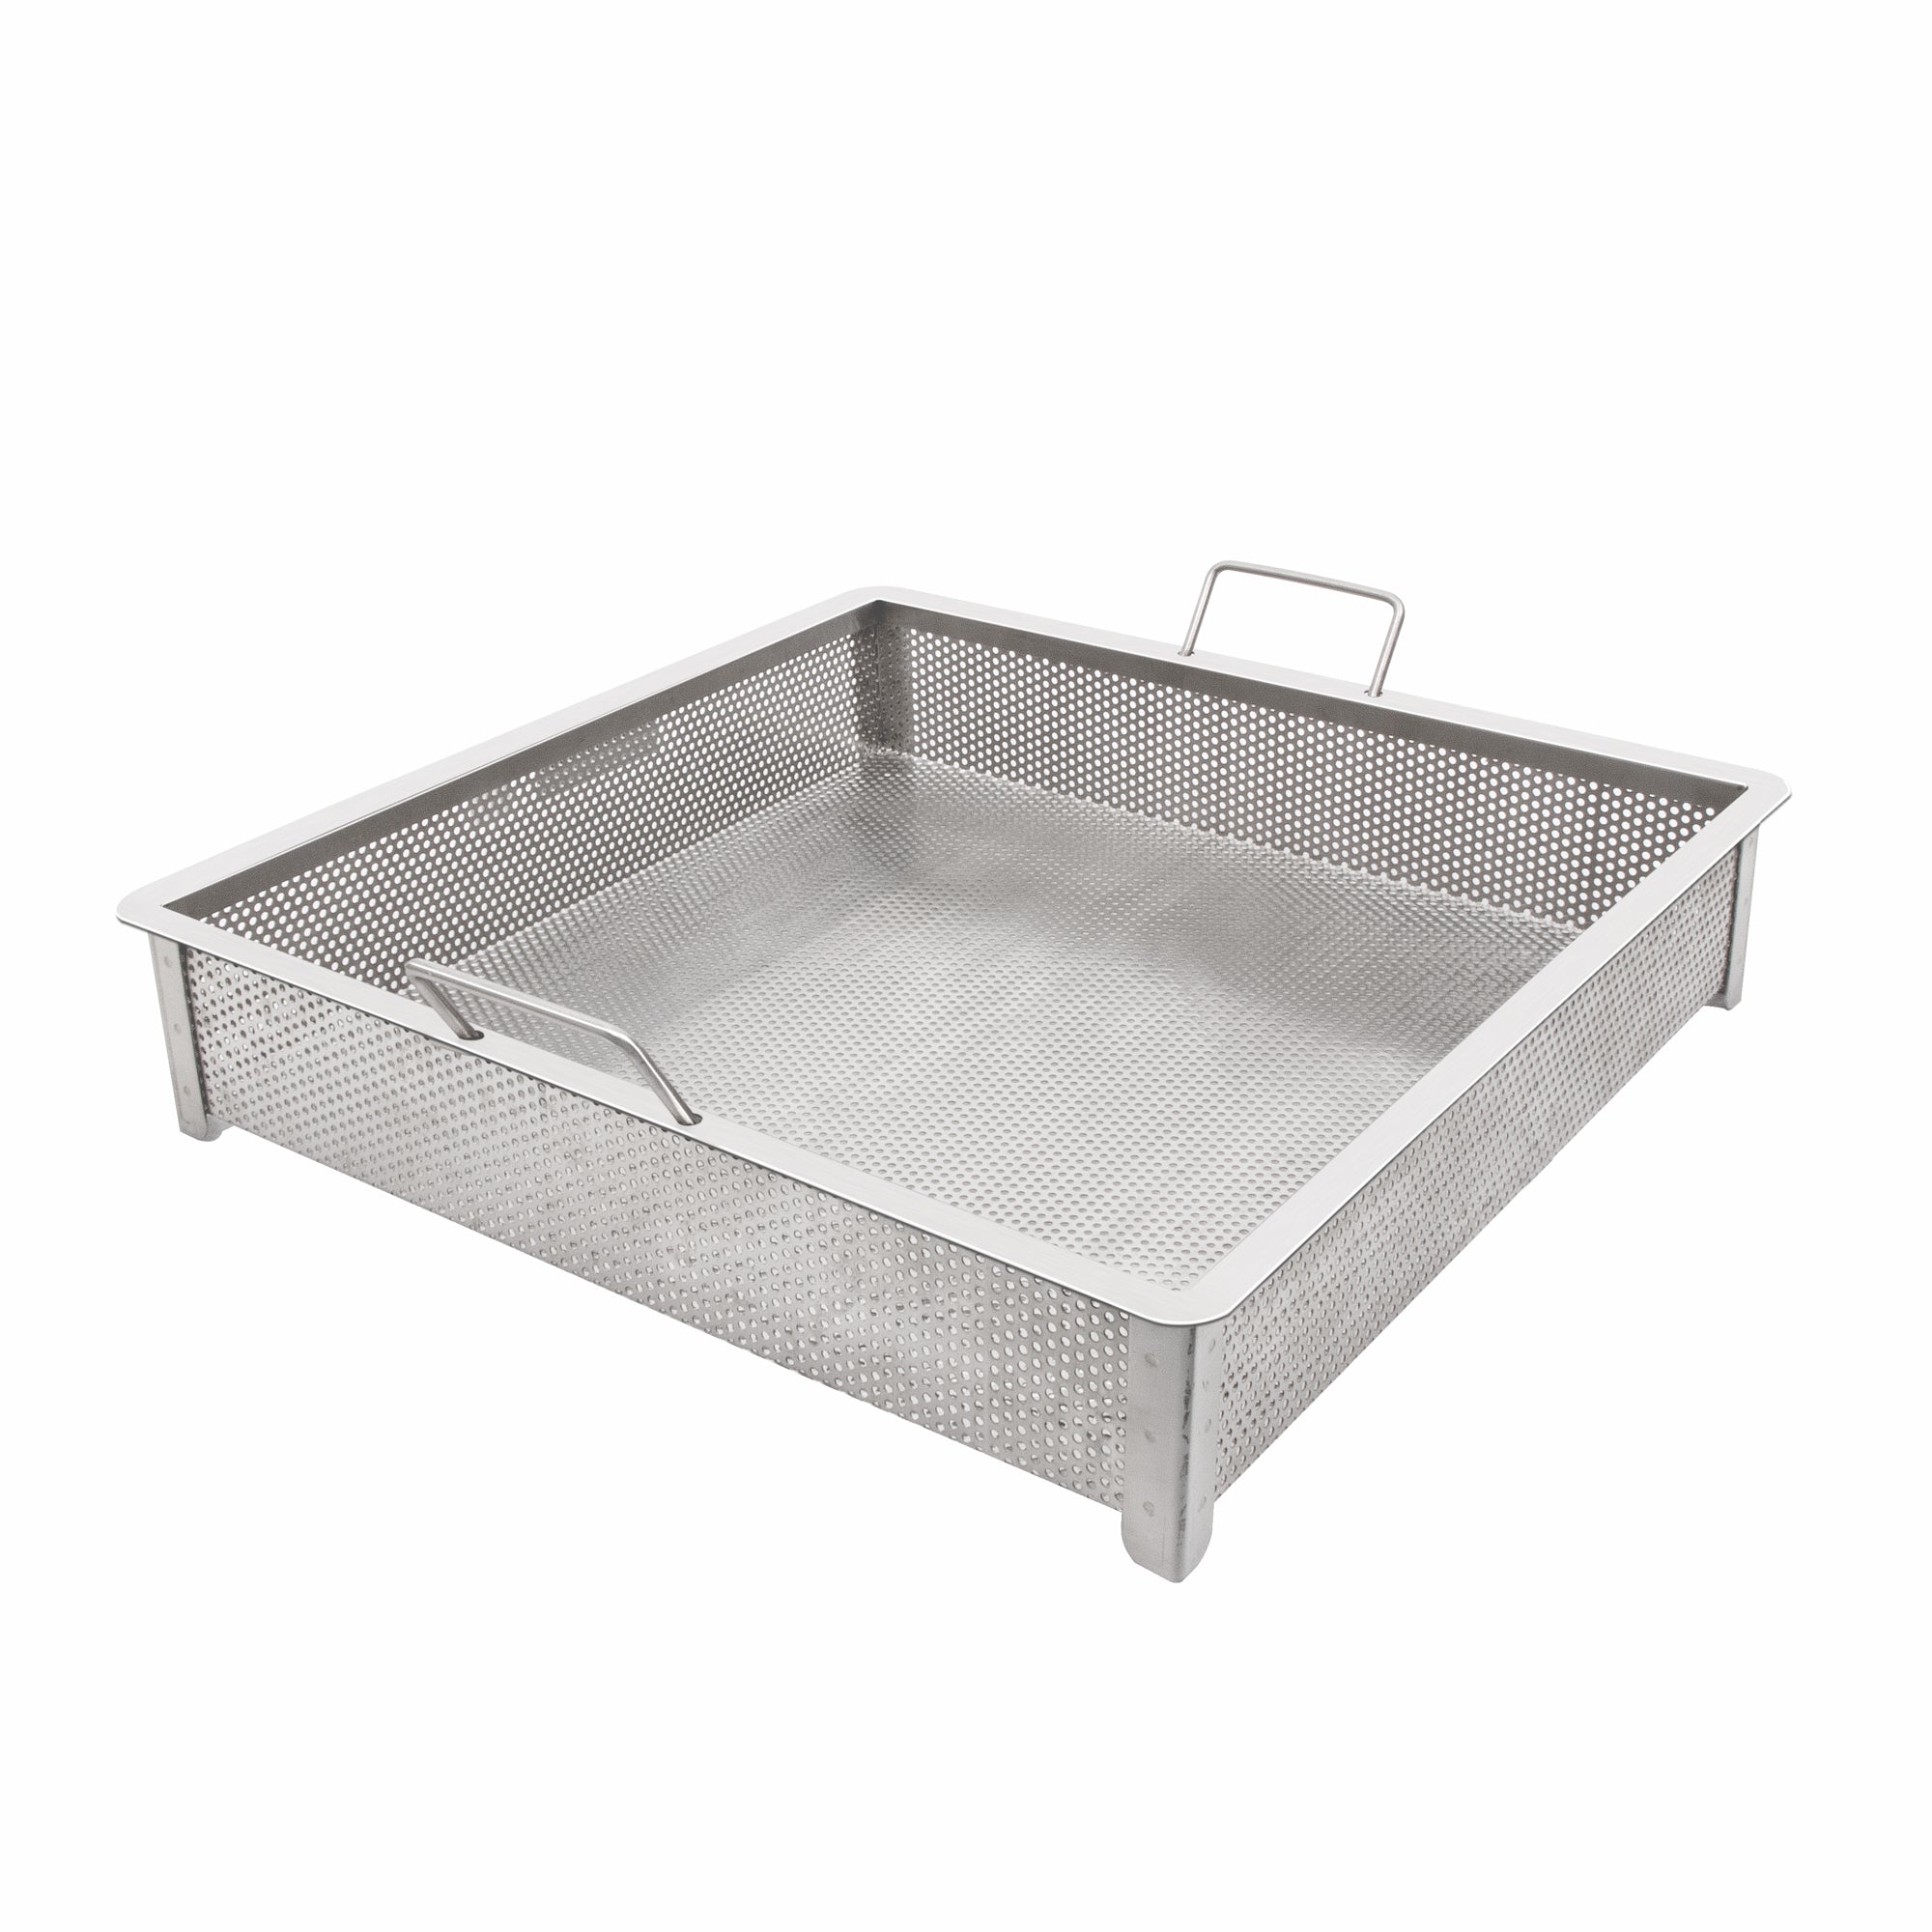 Leyso Stainless Steel Compartment ETL Certified Drop-In Sink Drain Basket (24" x 24", Drain Basket)